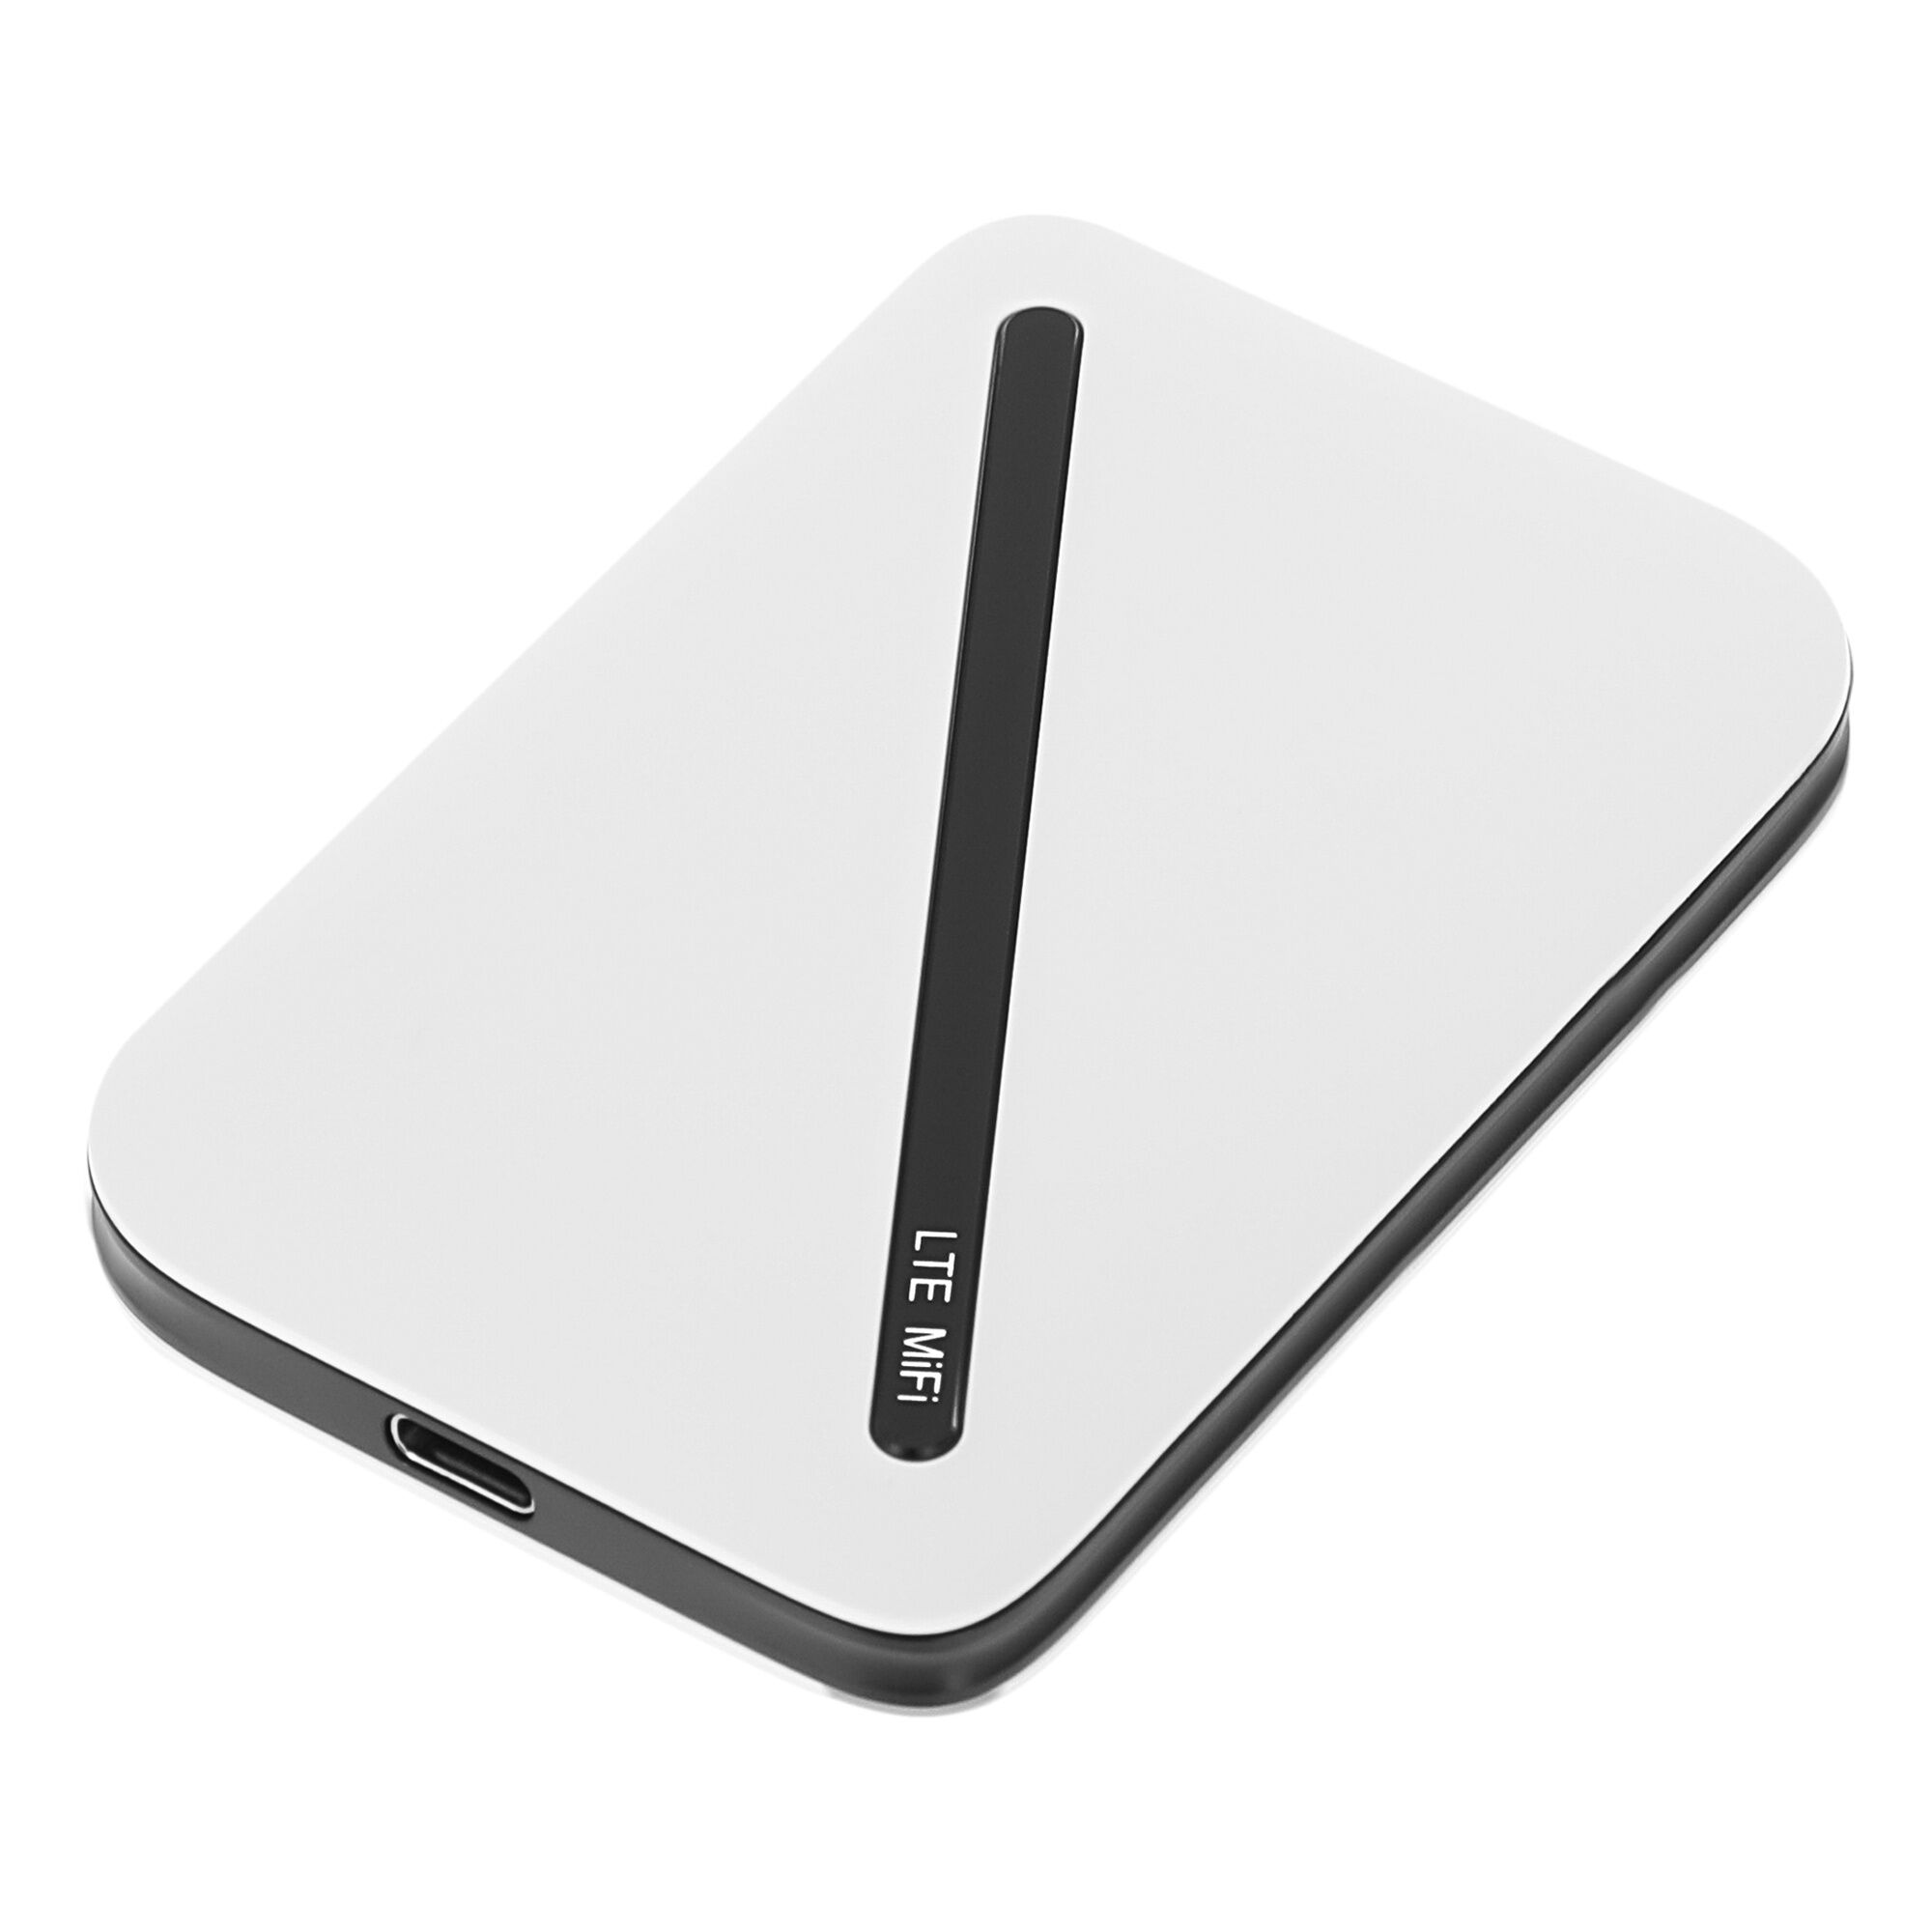 Модем 3G/4G Digma Mobile Wi-Fi DMW1967 USB Type-C Wi-Fi Firewall +Router внешний белый